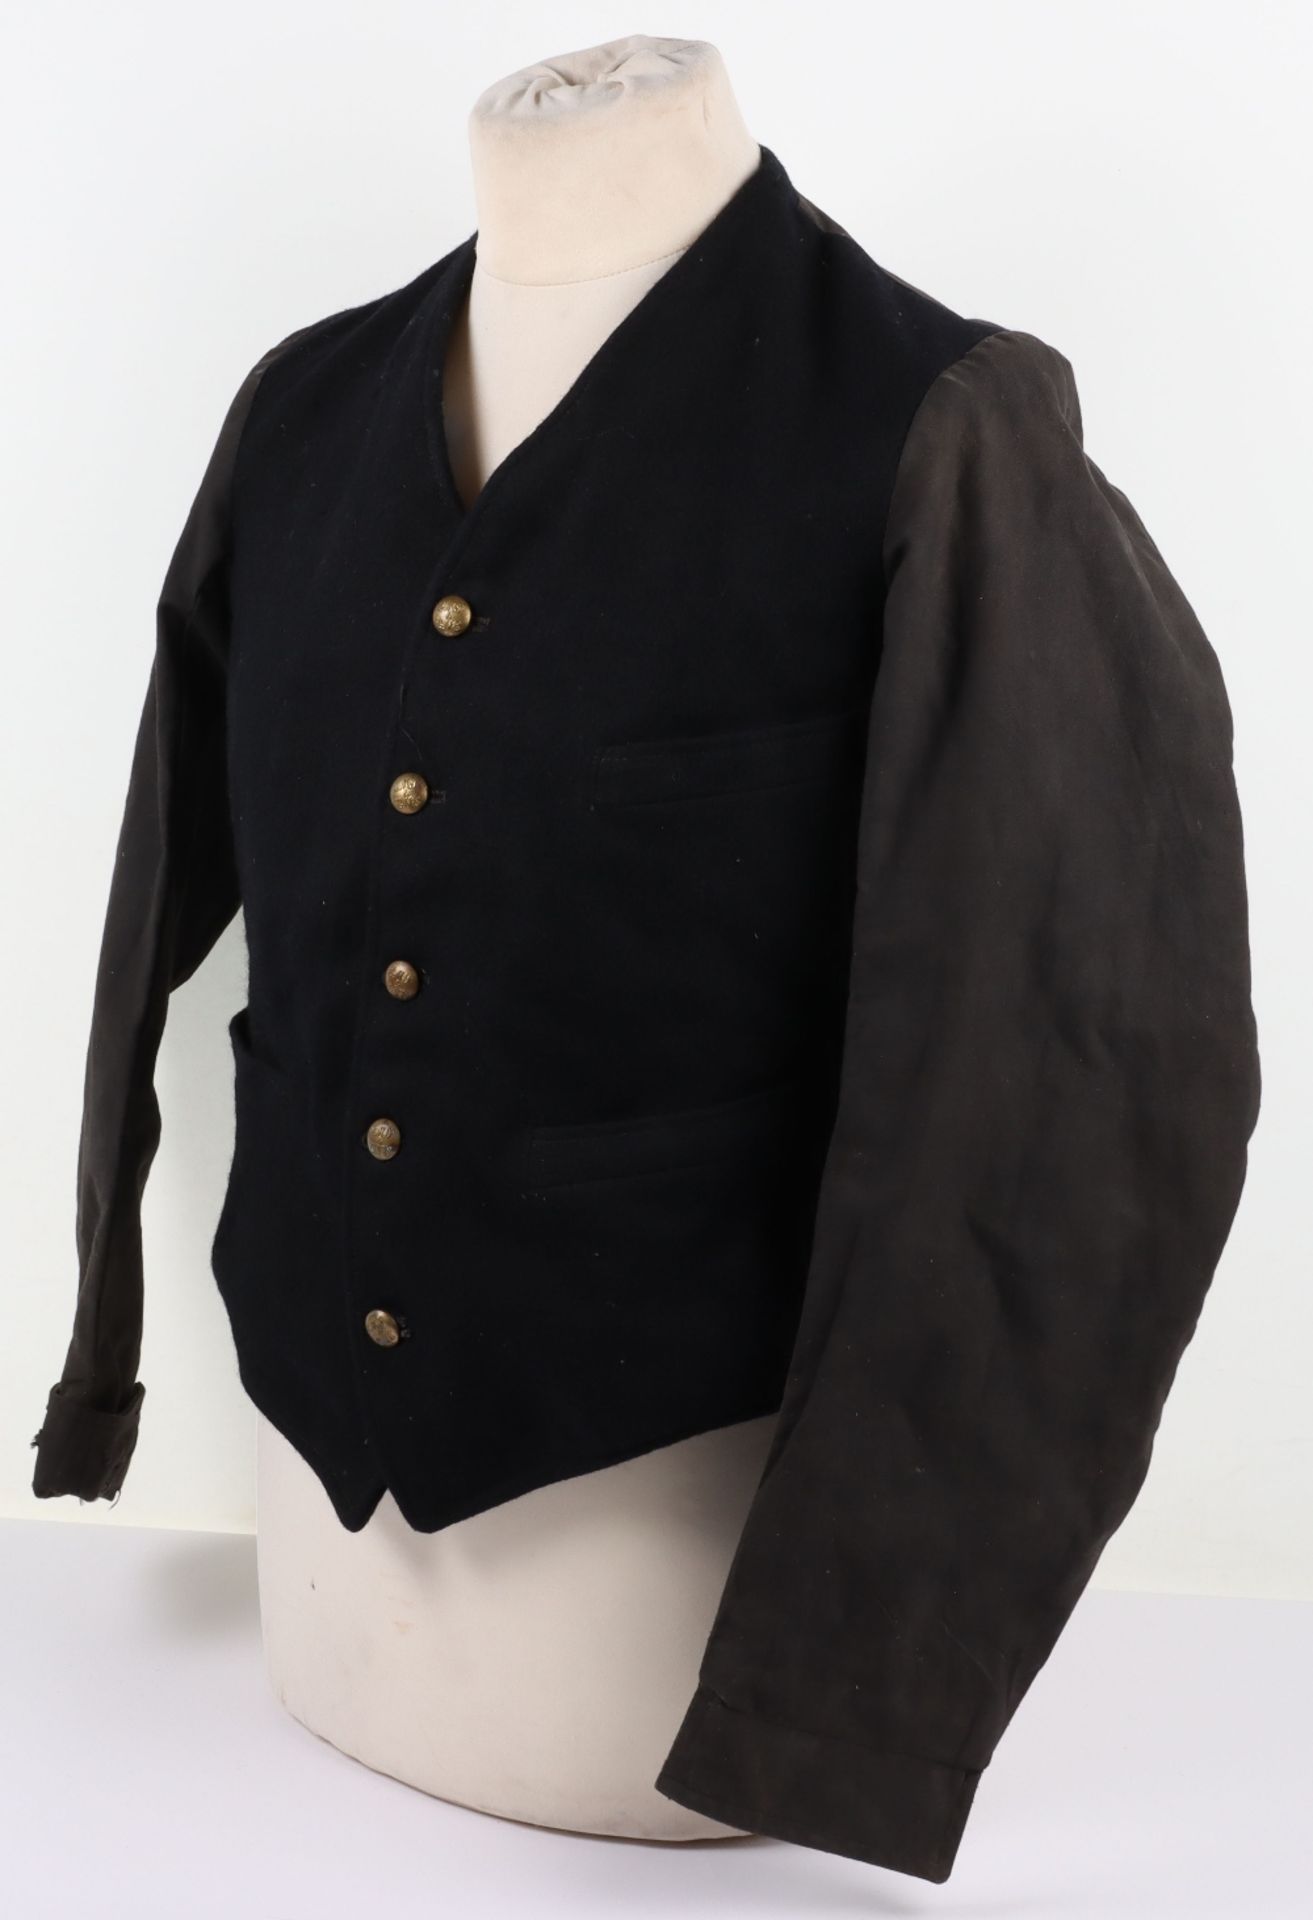 A London, Midland & Scottish and London North Eastern Railway porter’s jacket, circa 1930 - Image 2 of 3